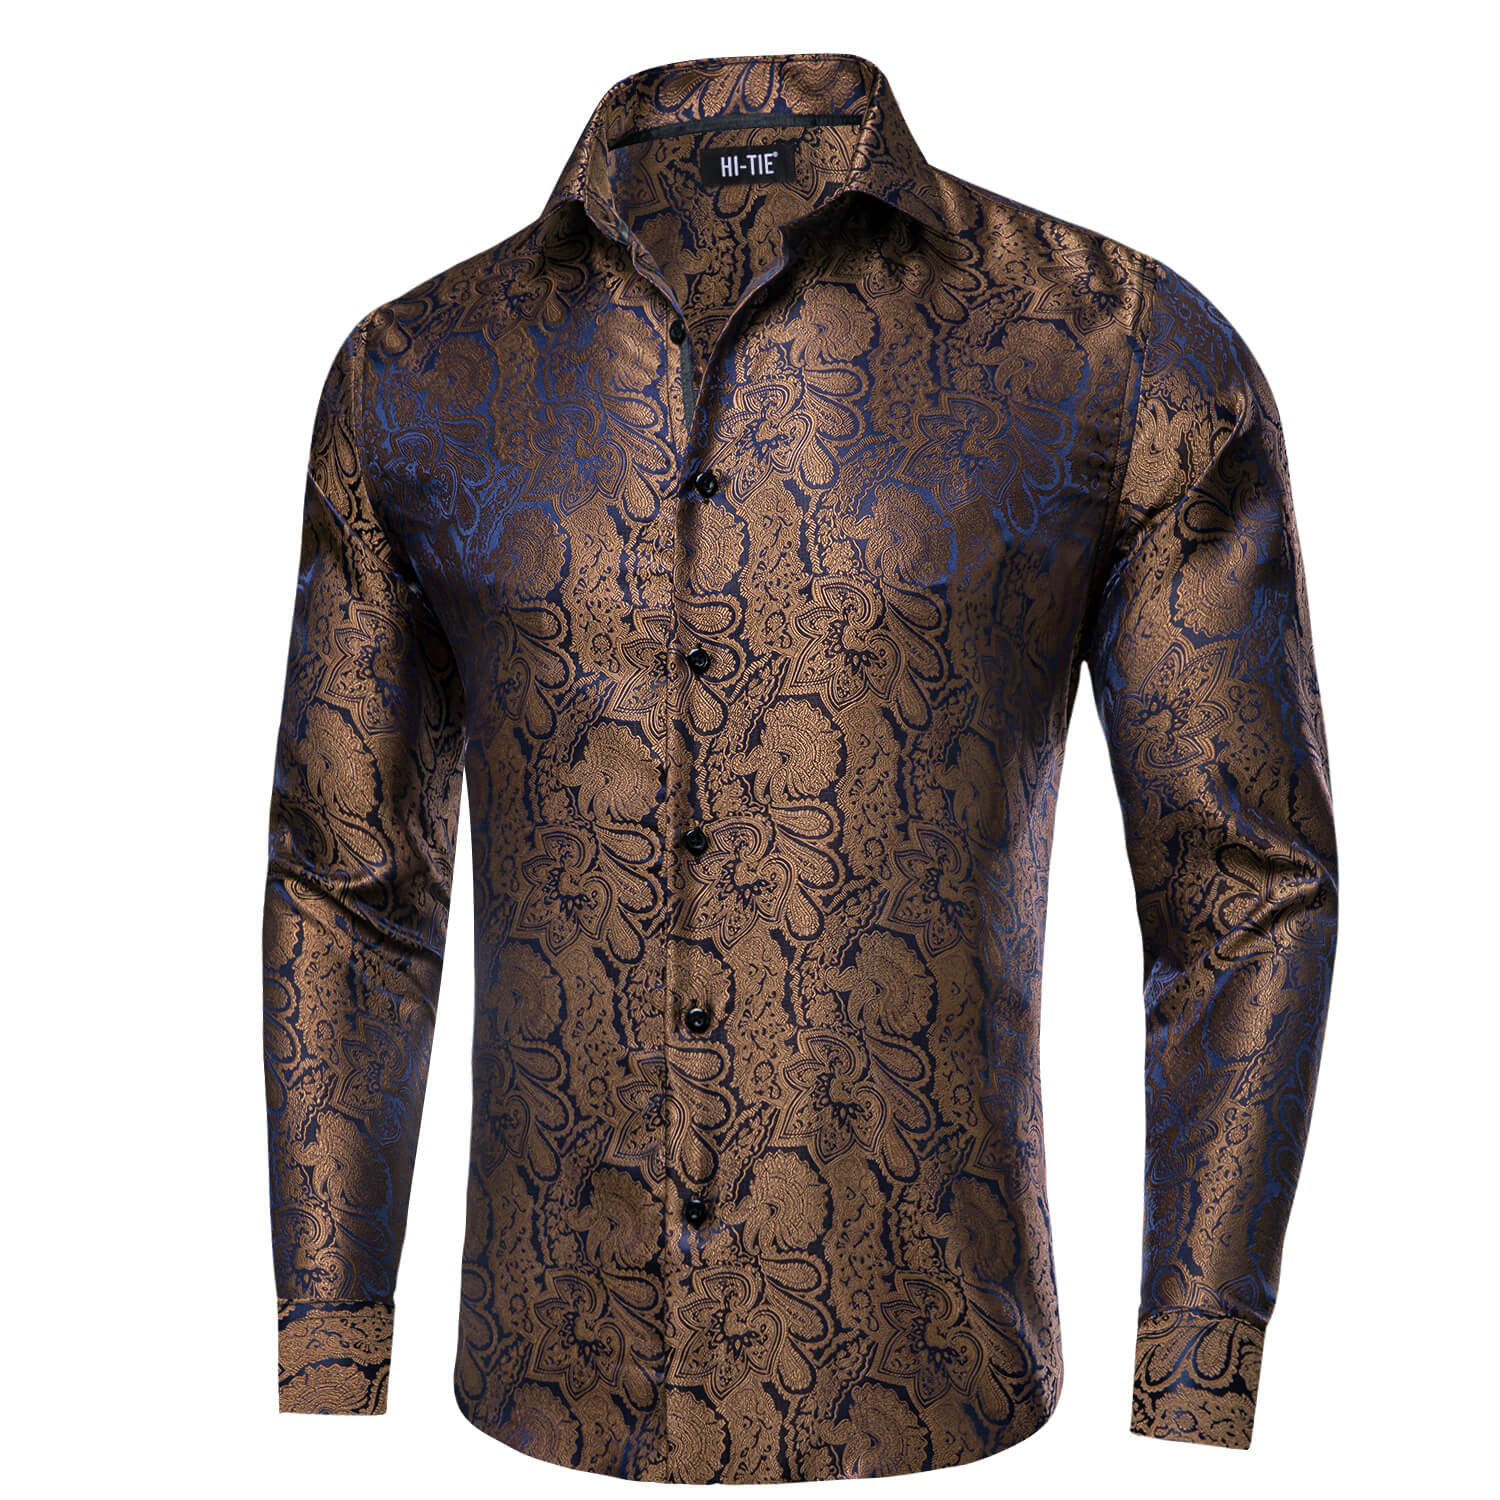 Hi-Tie Men's Shirt Peanut Brown Blue Jacquard Floral Silk Shirt Fashion